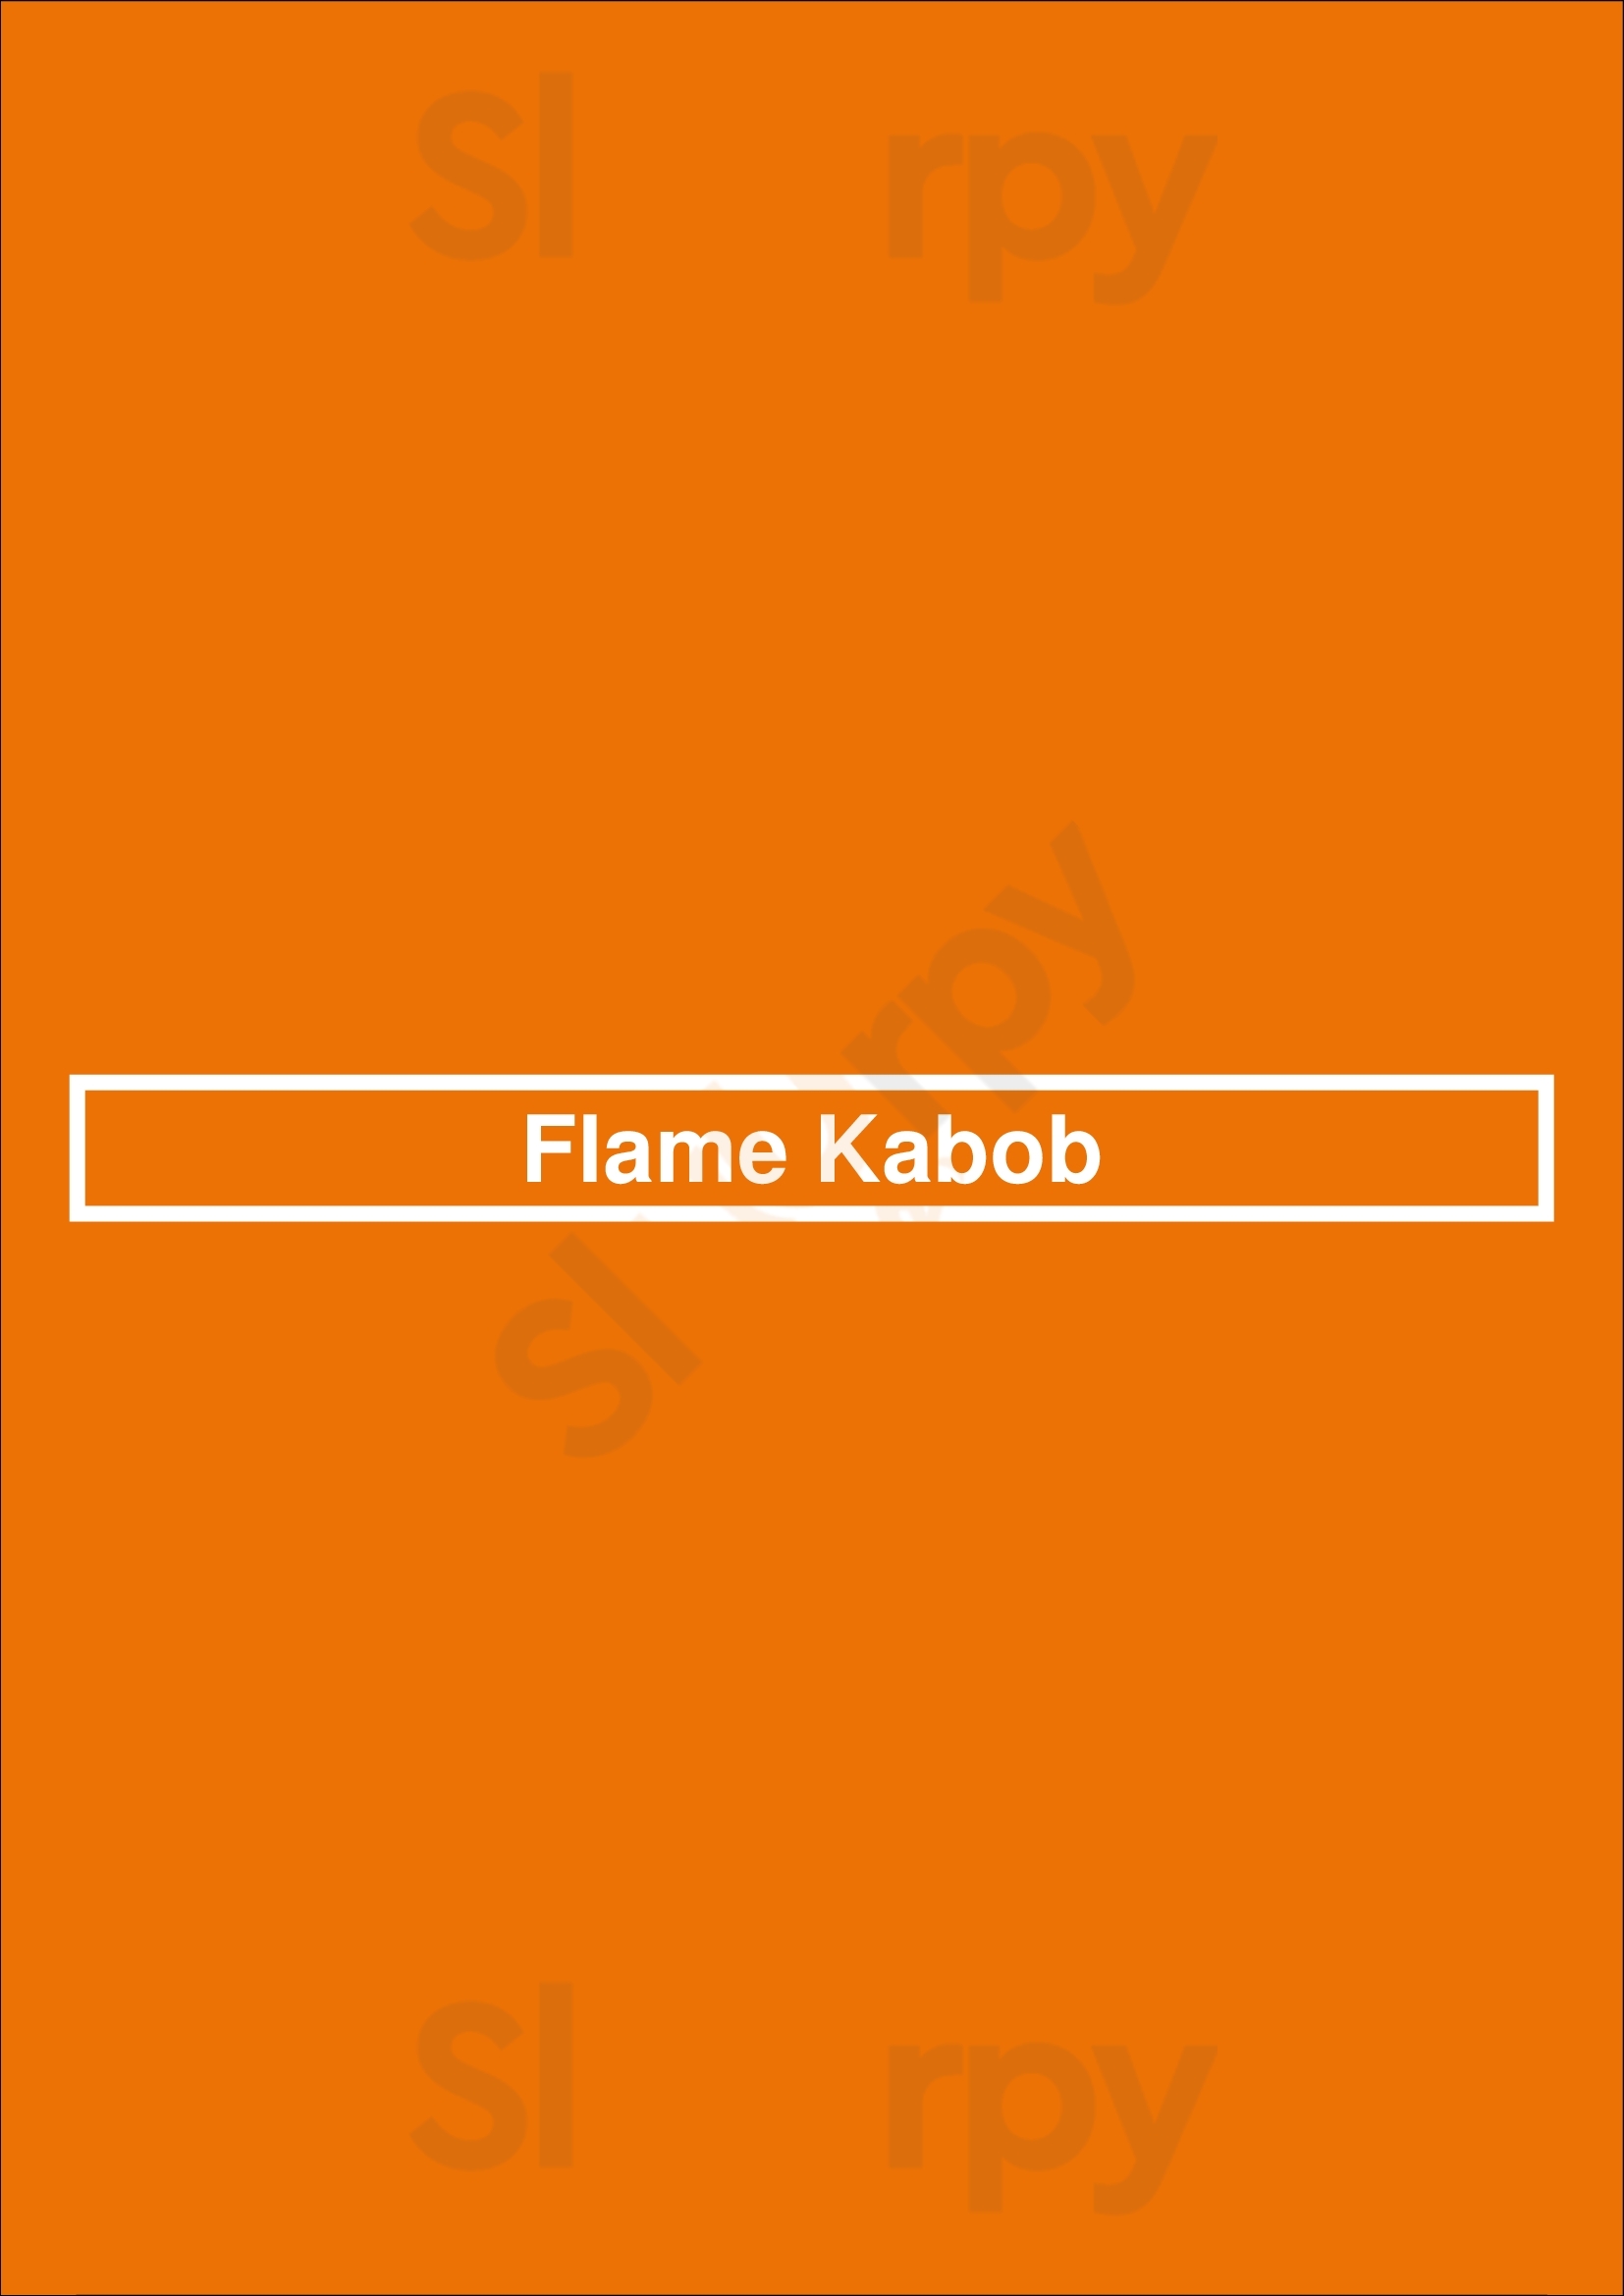 Flame Kabob Henderson Menu - 1